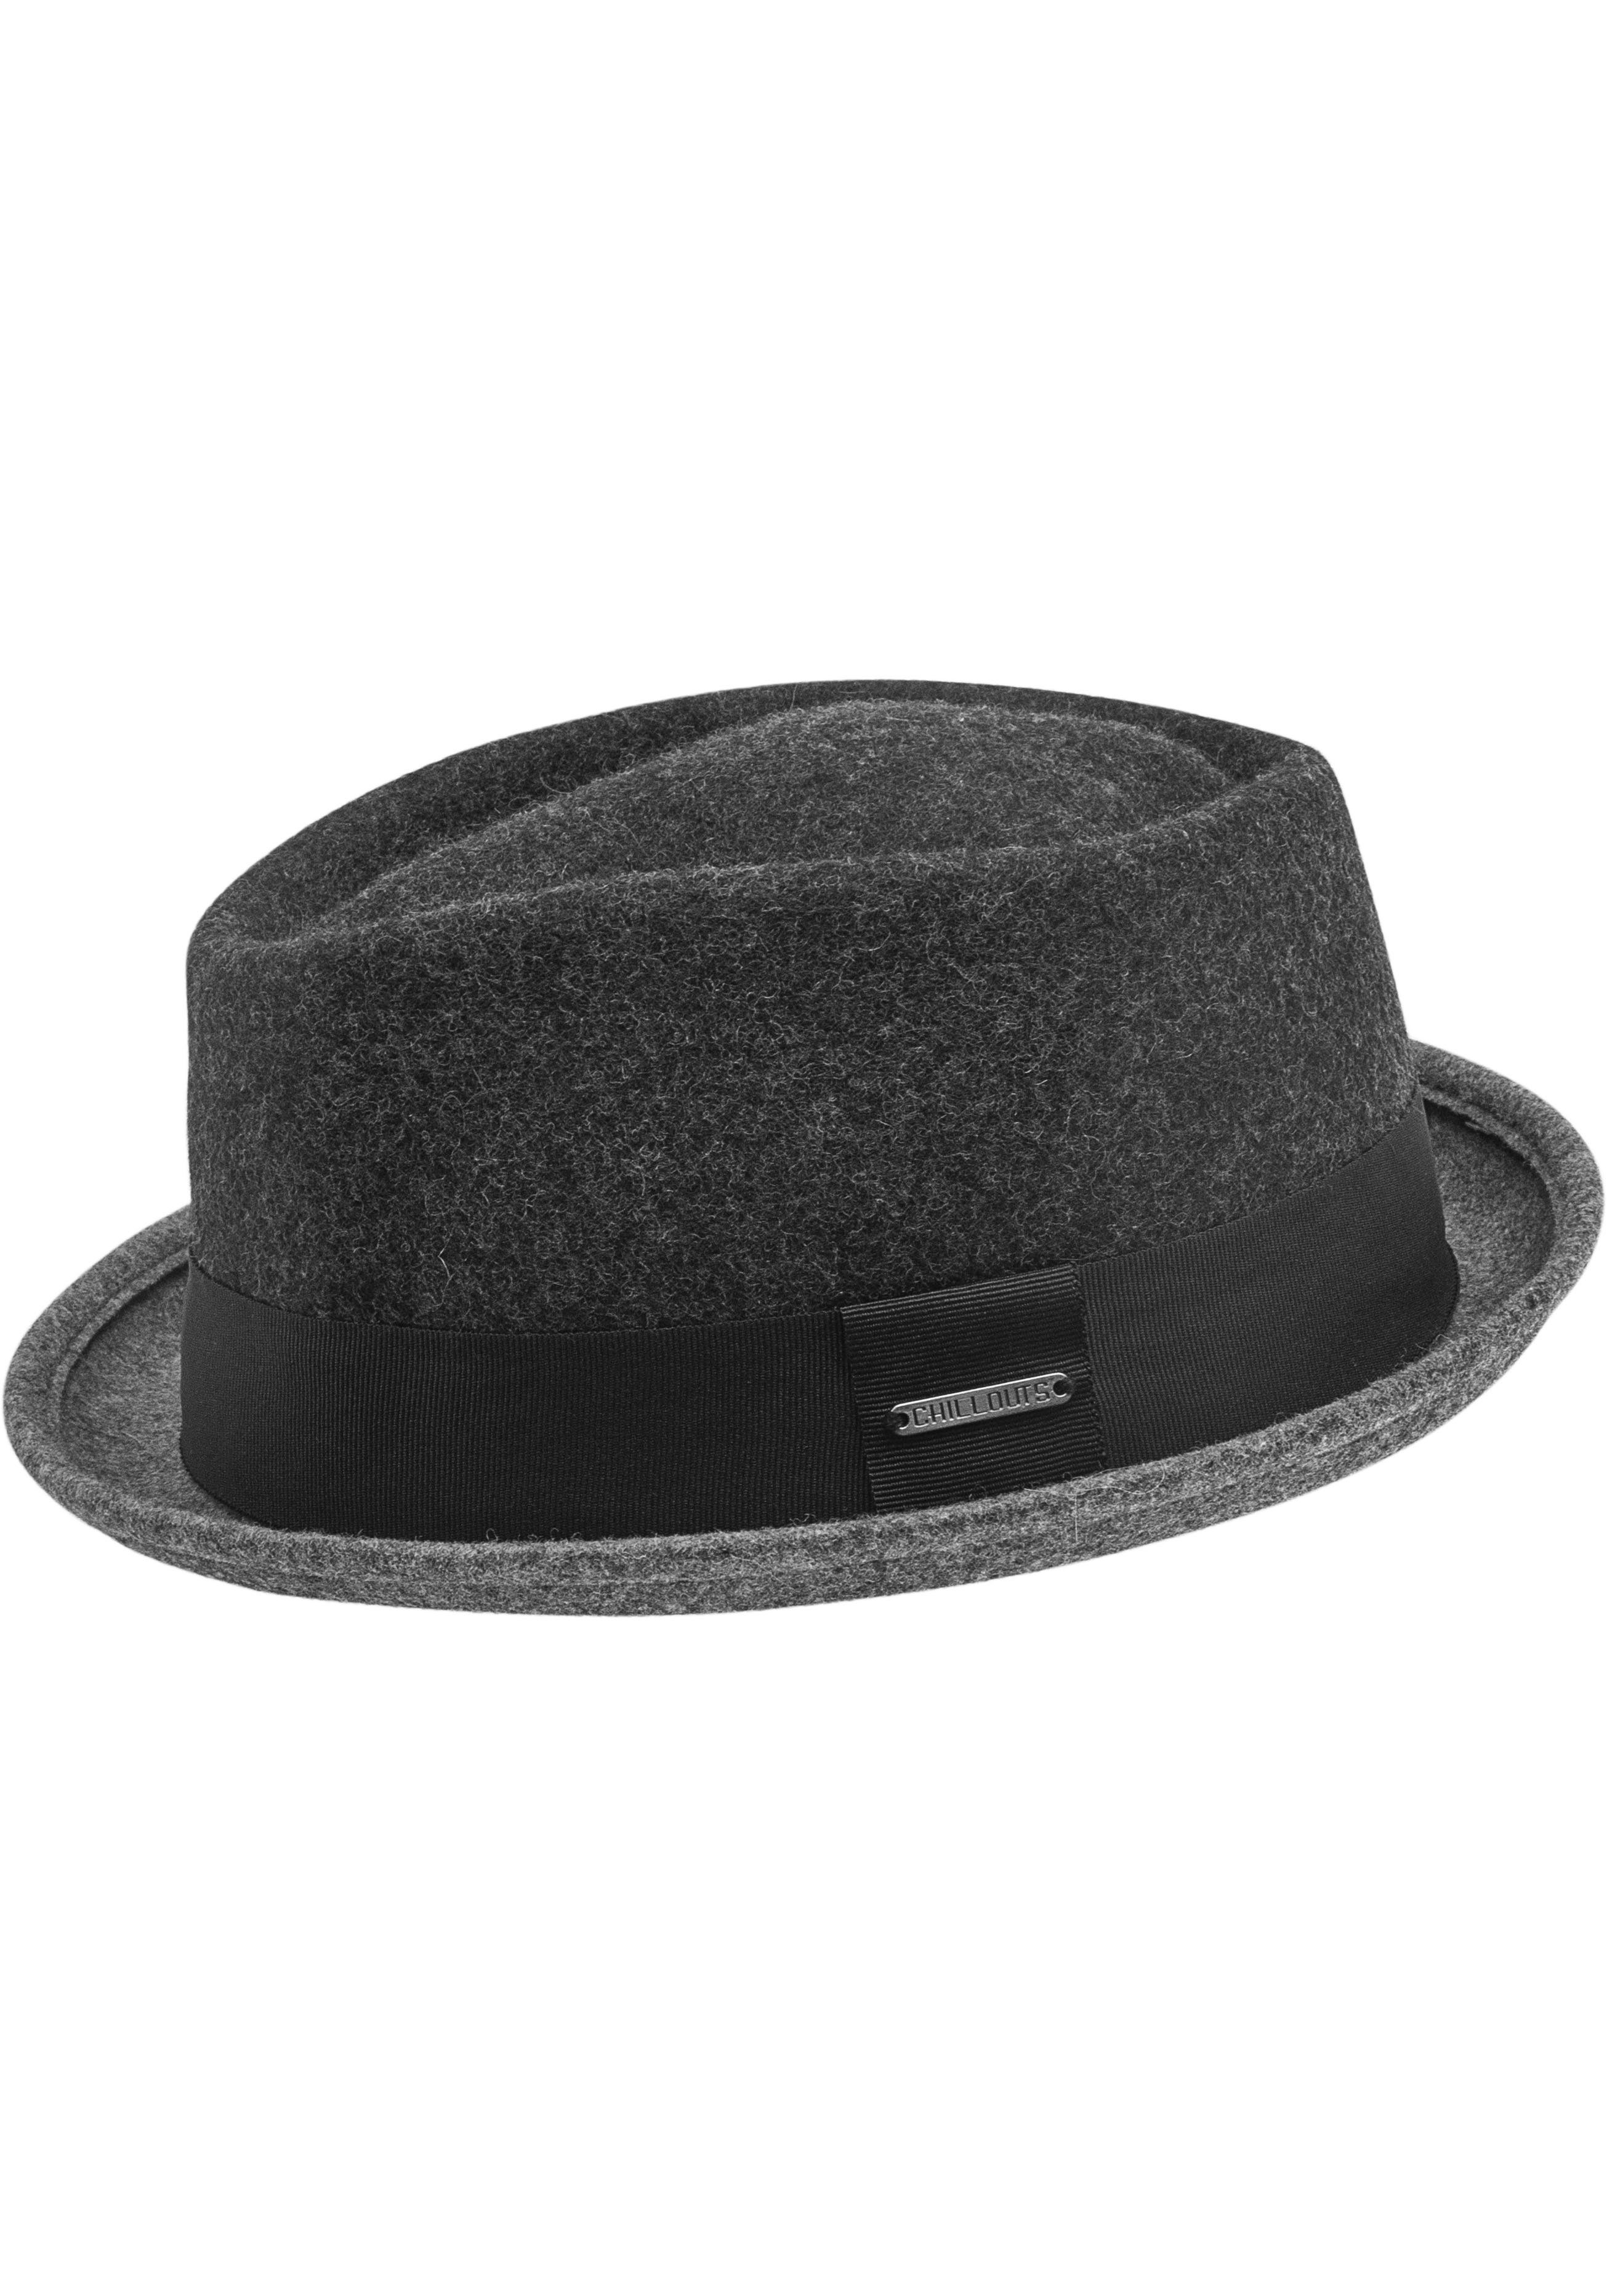 chillouts Filzhut Neal Hat dark grey